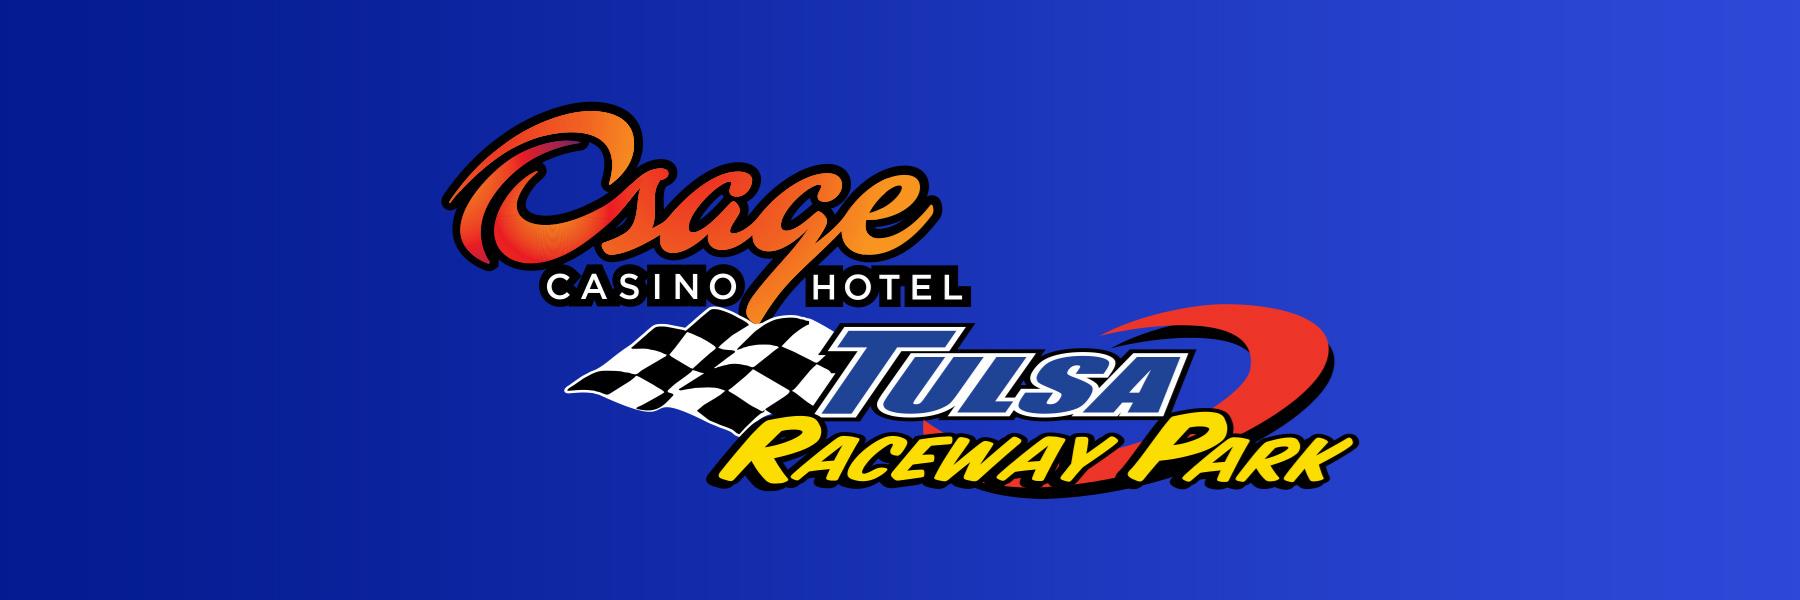 Tulsa Raceway Park